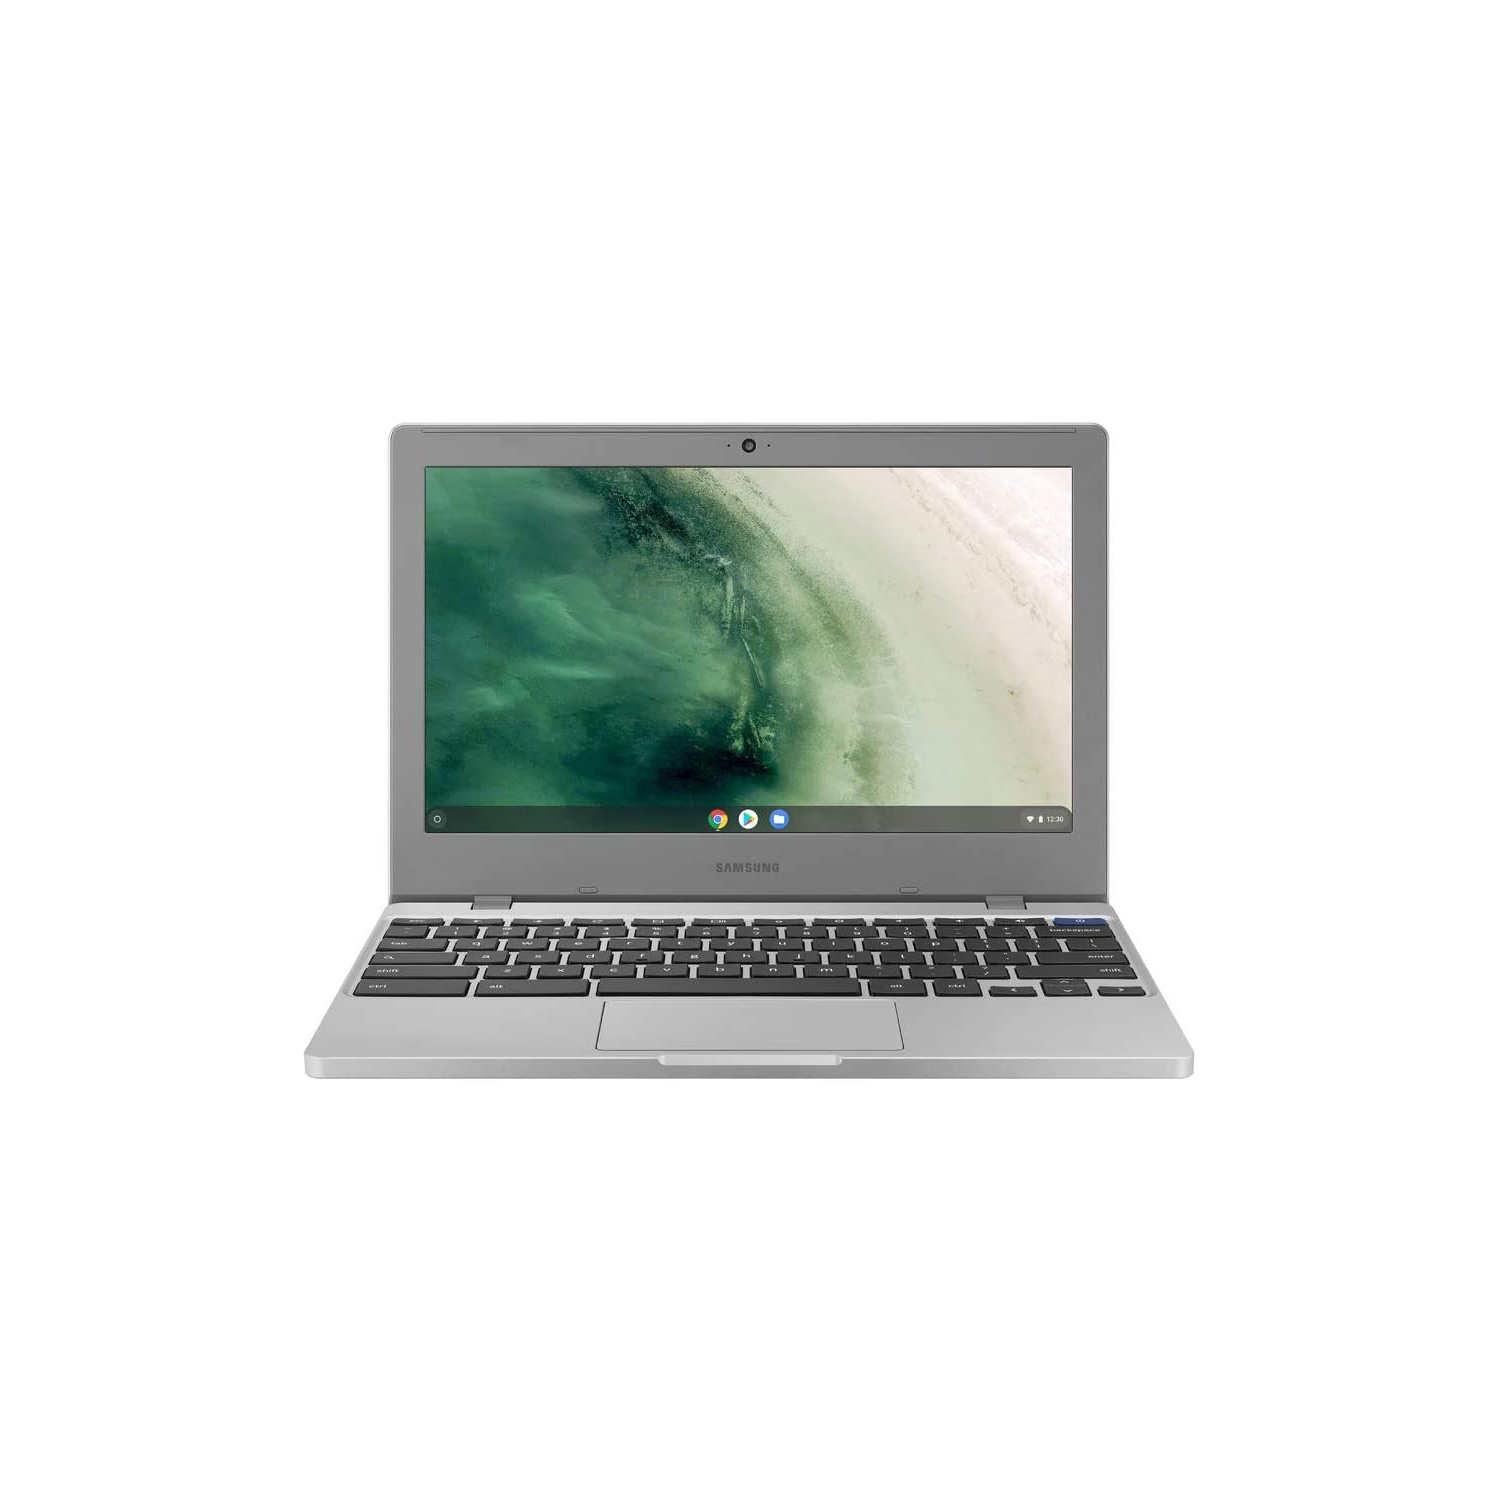 Refurbished (Excellent) - Samsung Chromebook 4 Chrome OS 11.6" HD N4000 32GB 4GB RAM Certified Refurbished